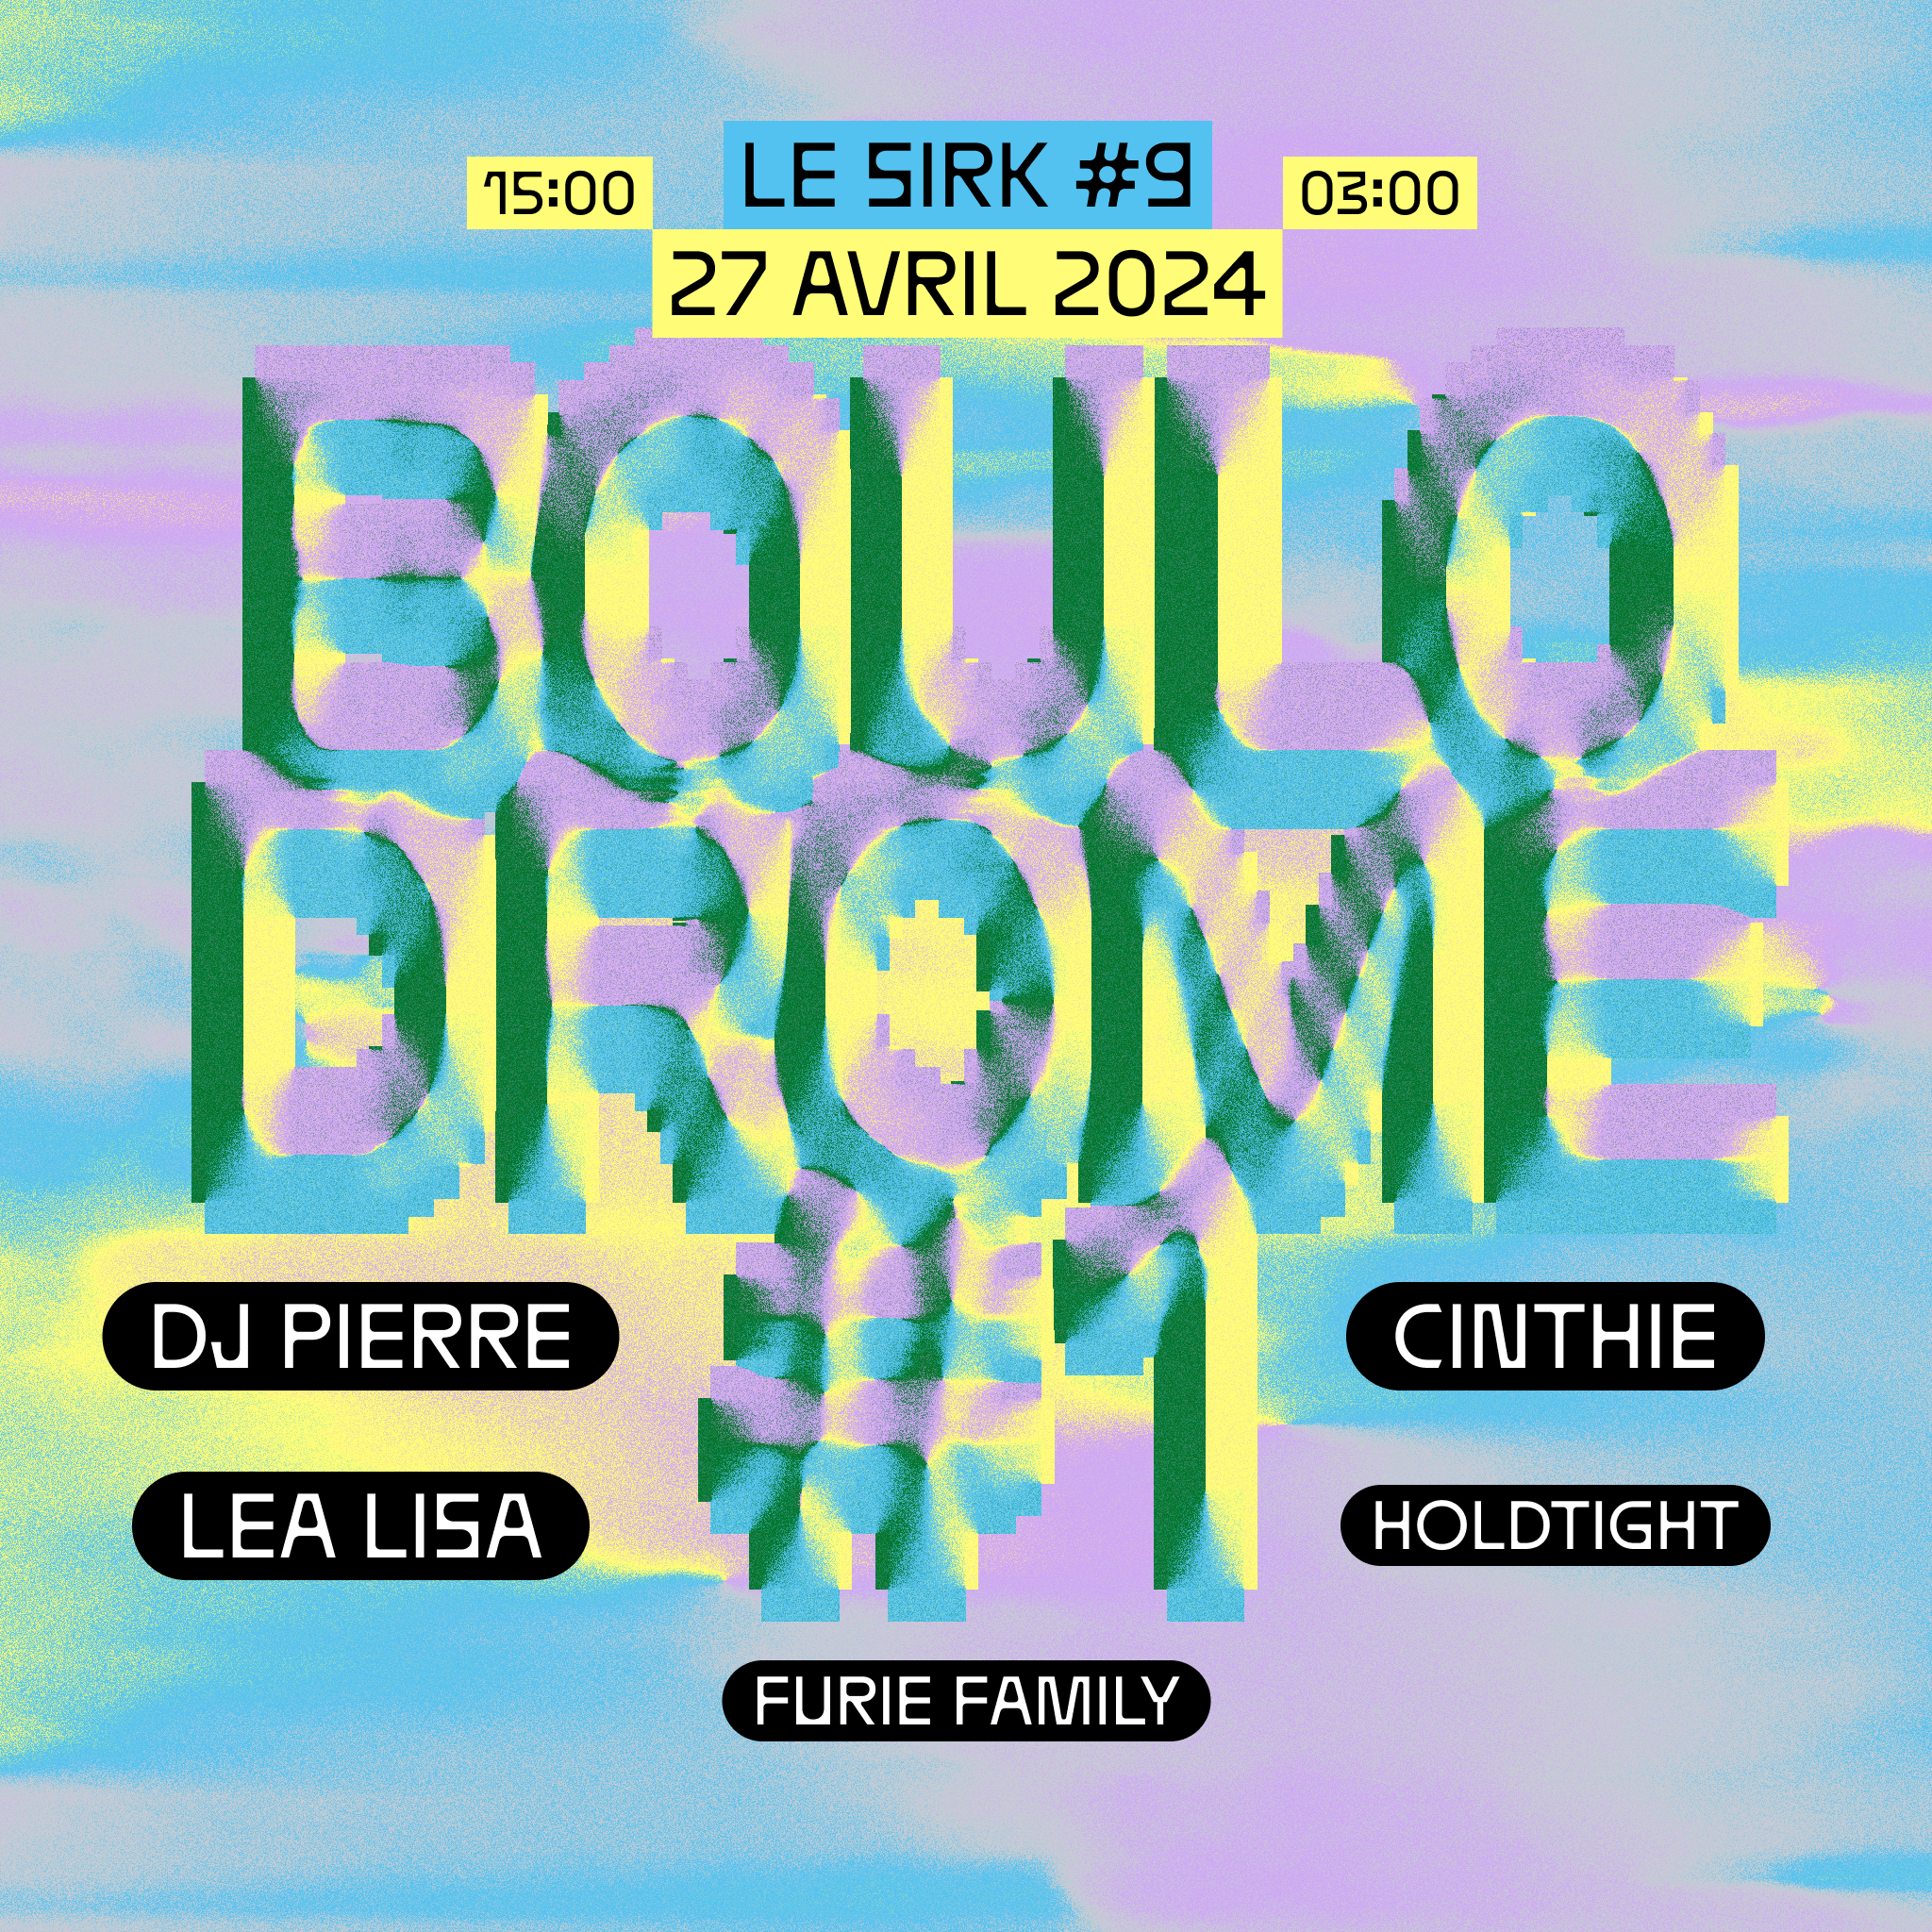 Le SIRK #9 at Boulodrome #1 - Página frontal